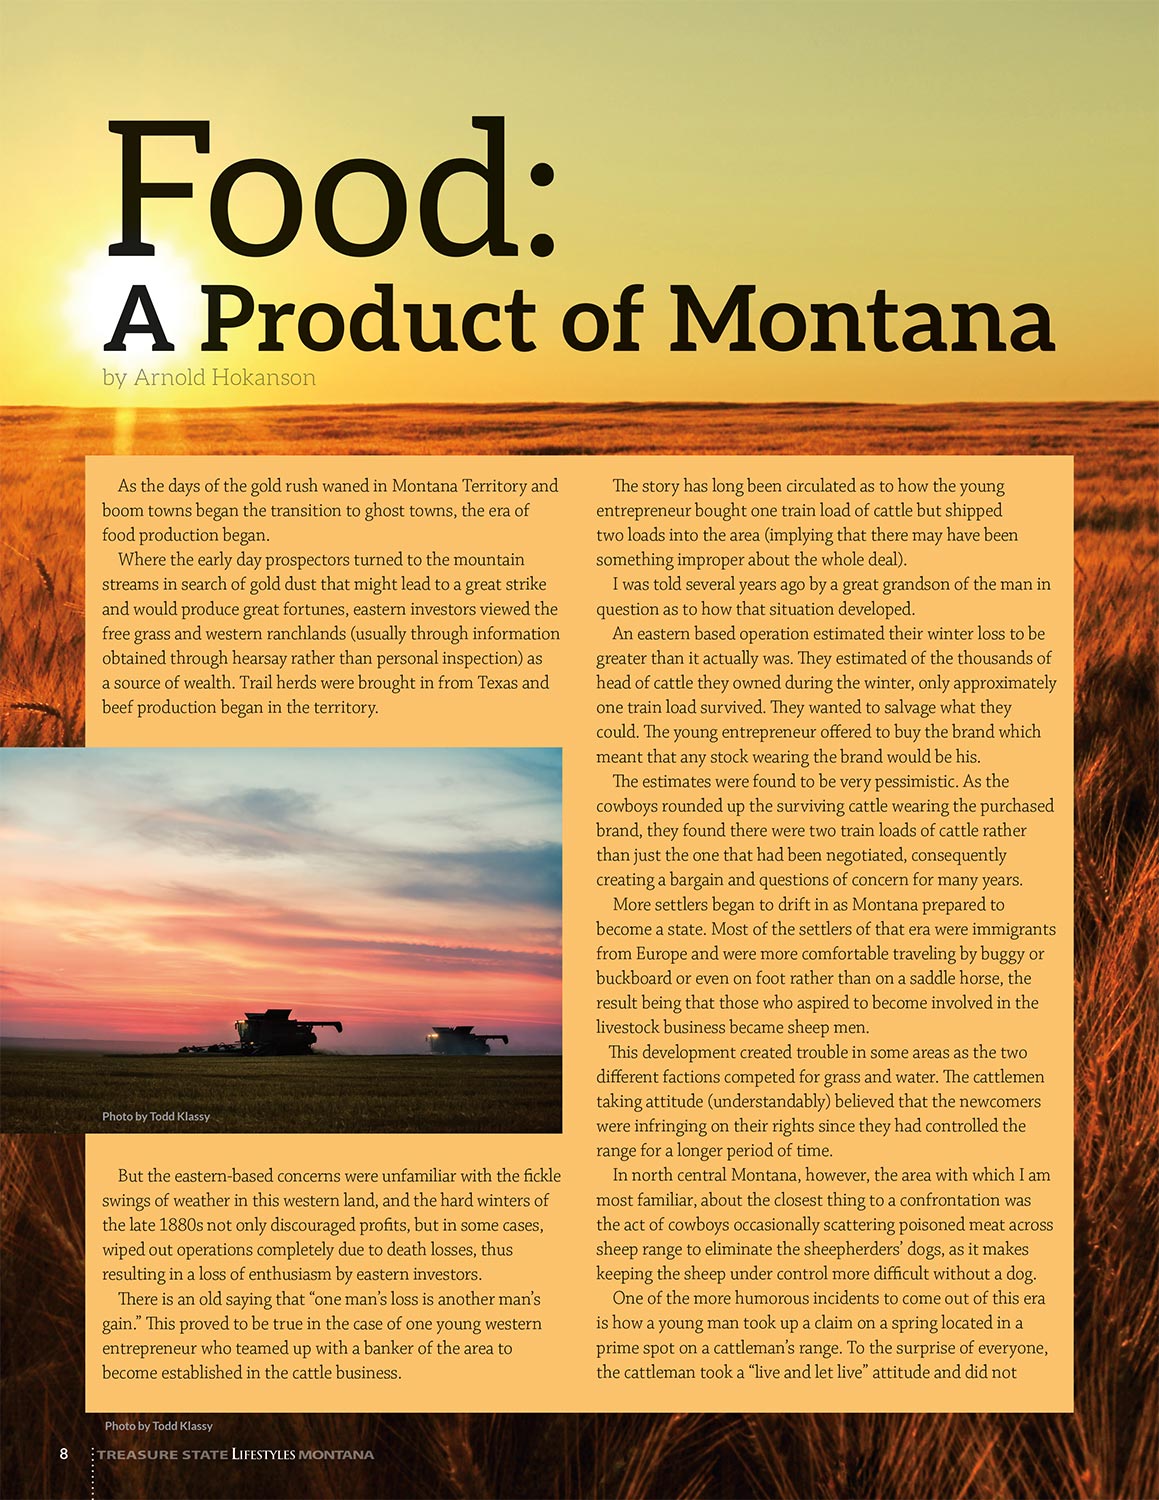 Photo of Montana Wheat Farming